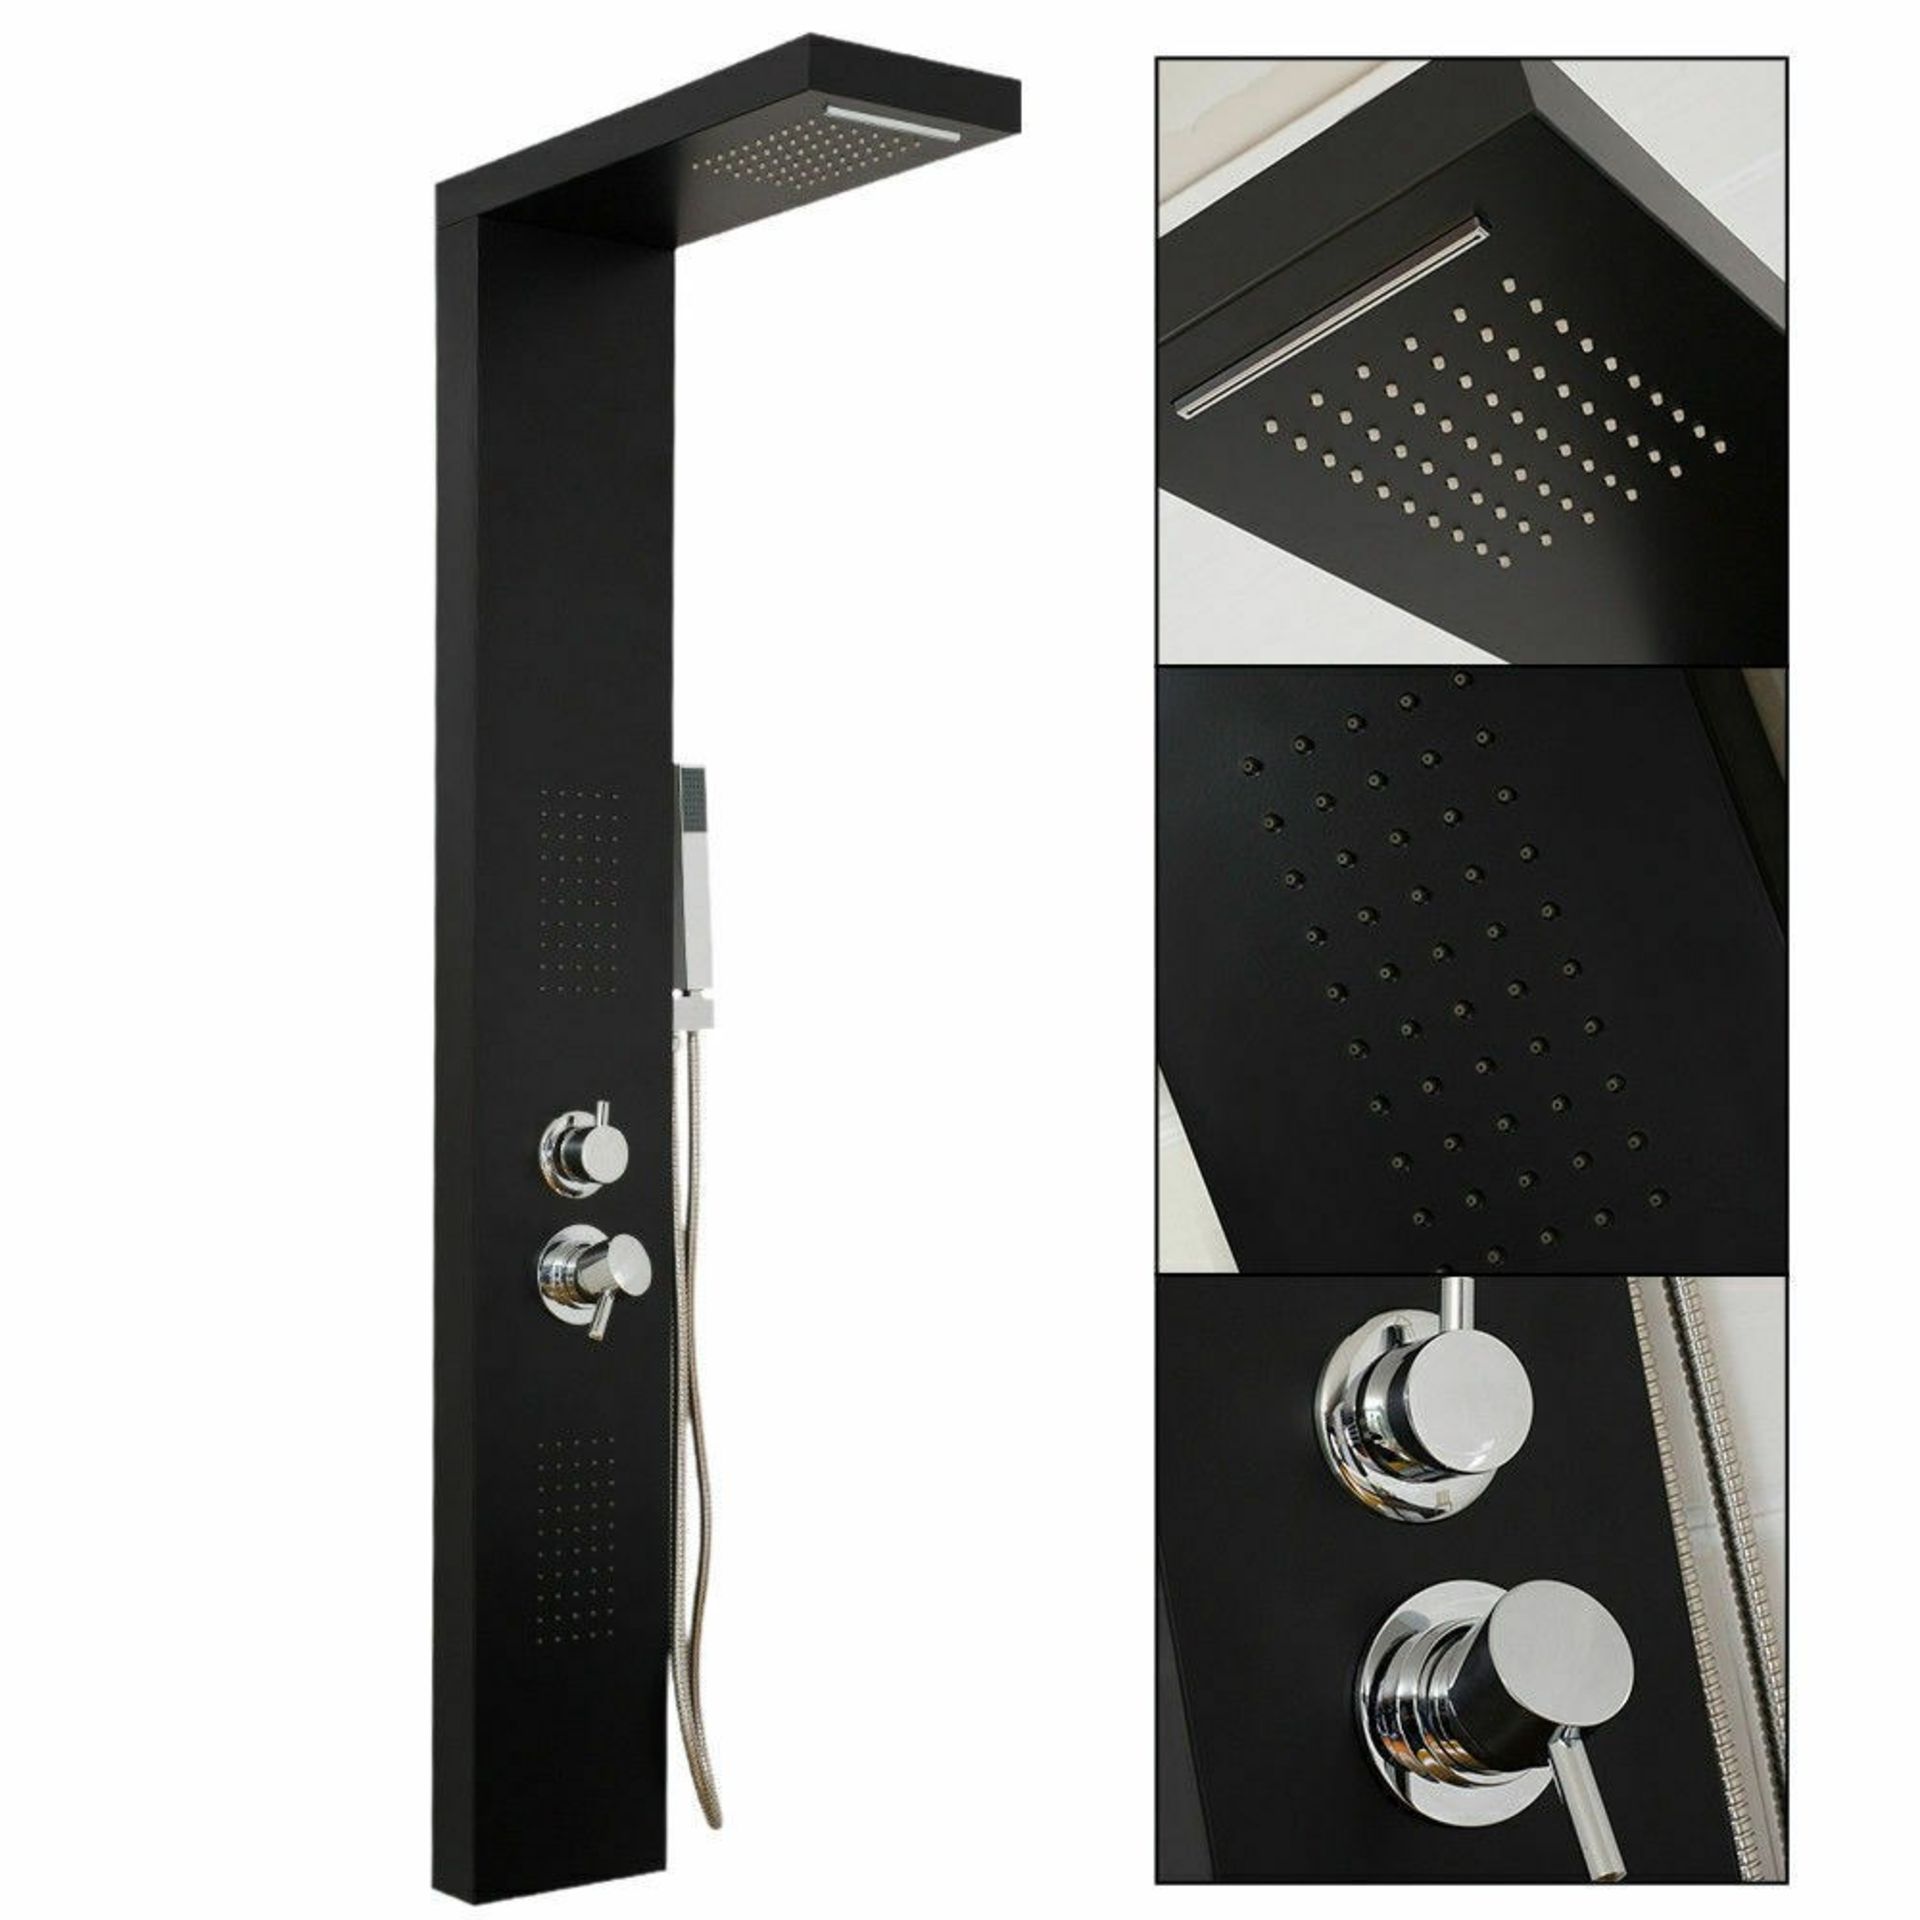 (DE5) Black Square Modern Bathroom Shower Column Tower Panel System With Hand Held & Massage Je... - Image 5 of 5